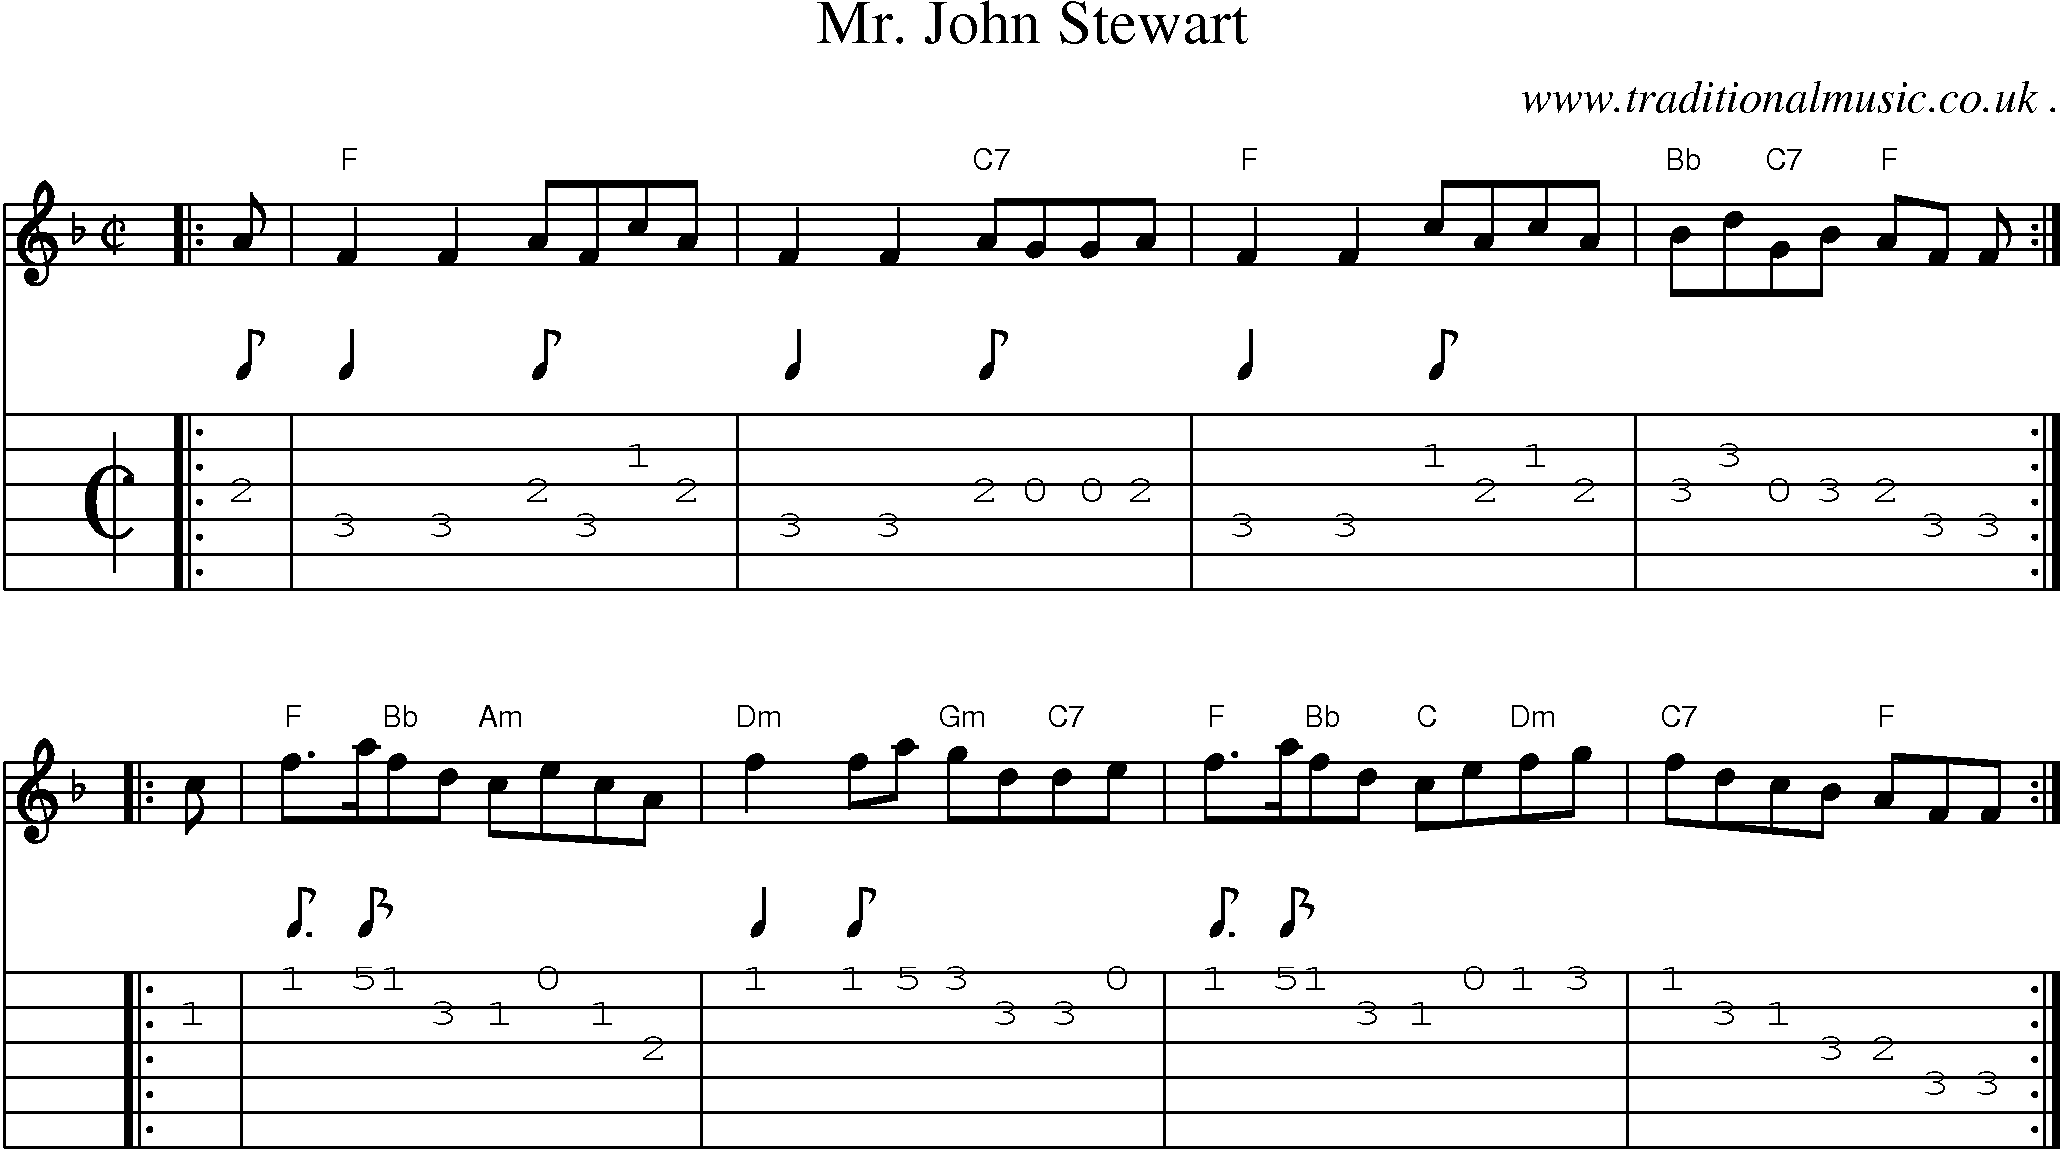 Sheet-music  score, Chords and Guitar Tabs for Mr John Stewart